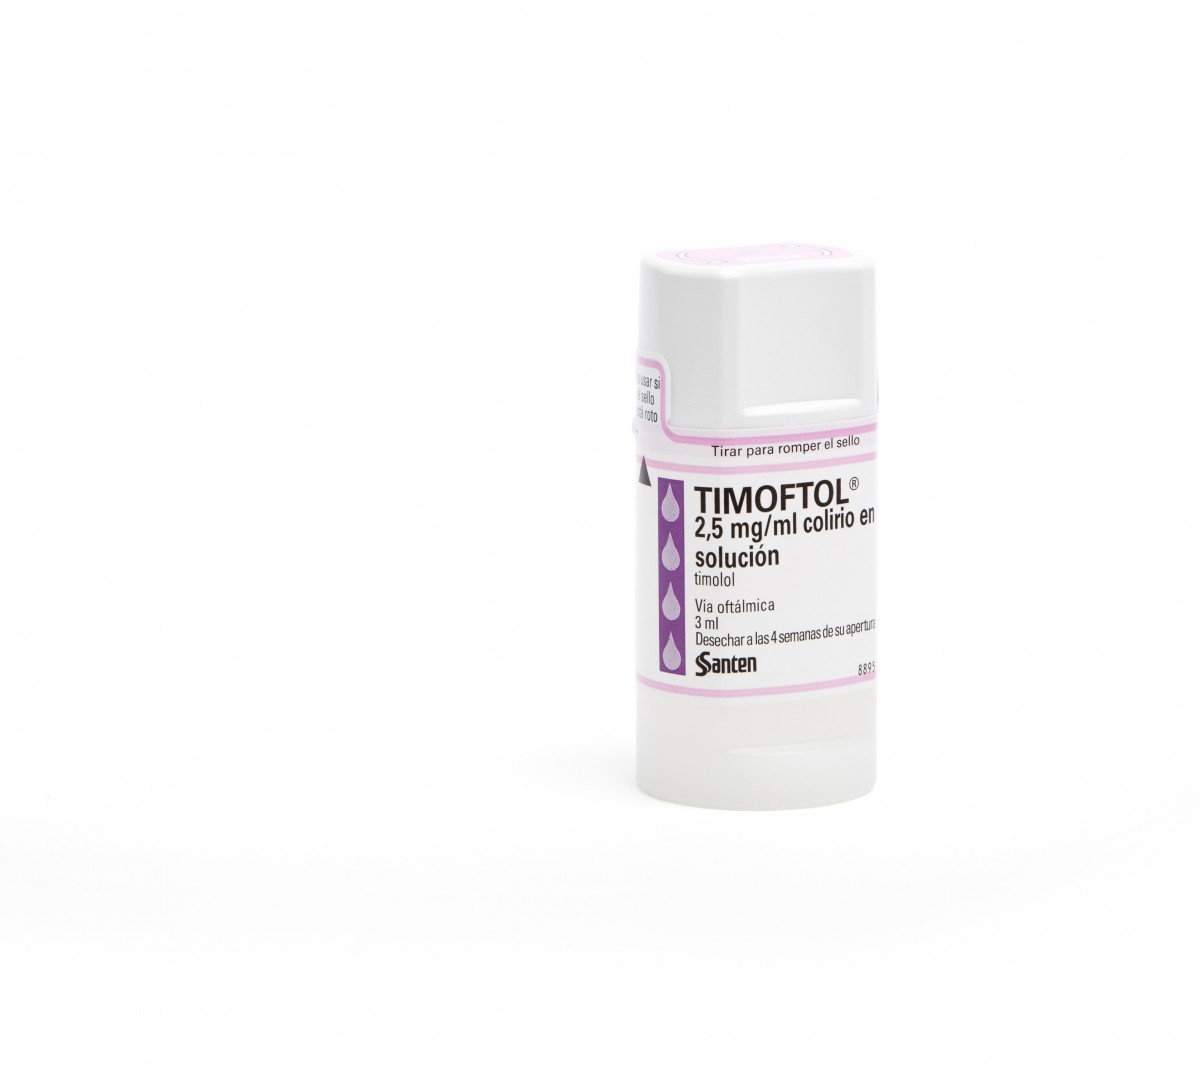 TIMOFTOL 2,5 mg/ml COLIRIO EN SOLUCION , 1 frasco de 3 ml fotografía de la forma farmacéutica.